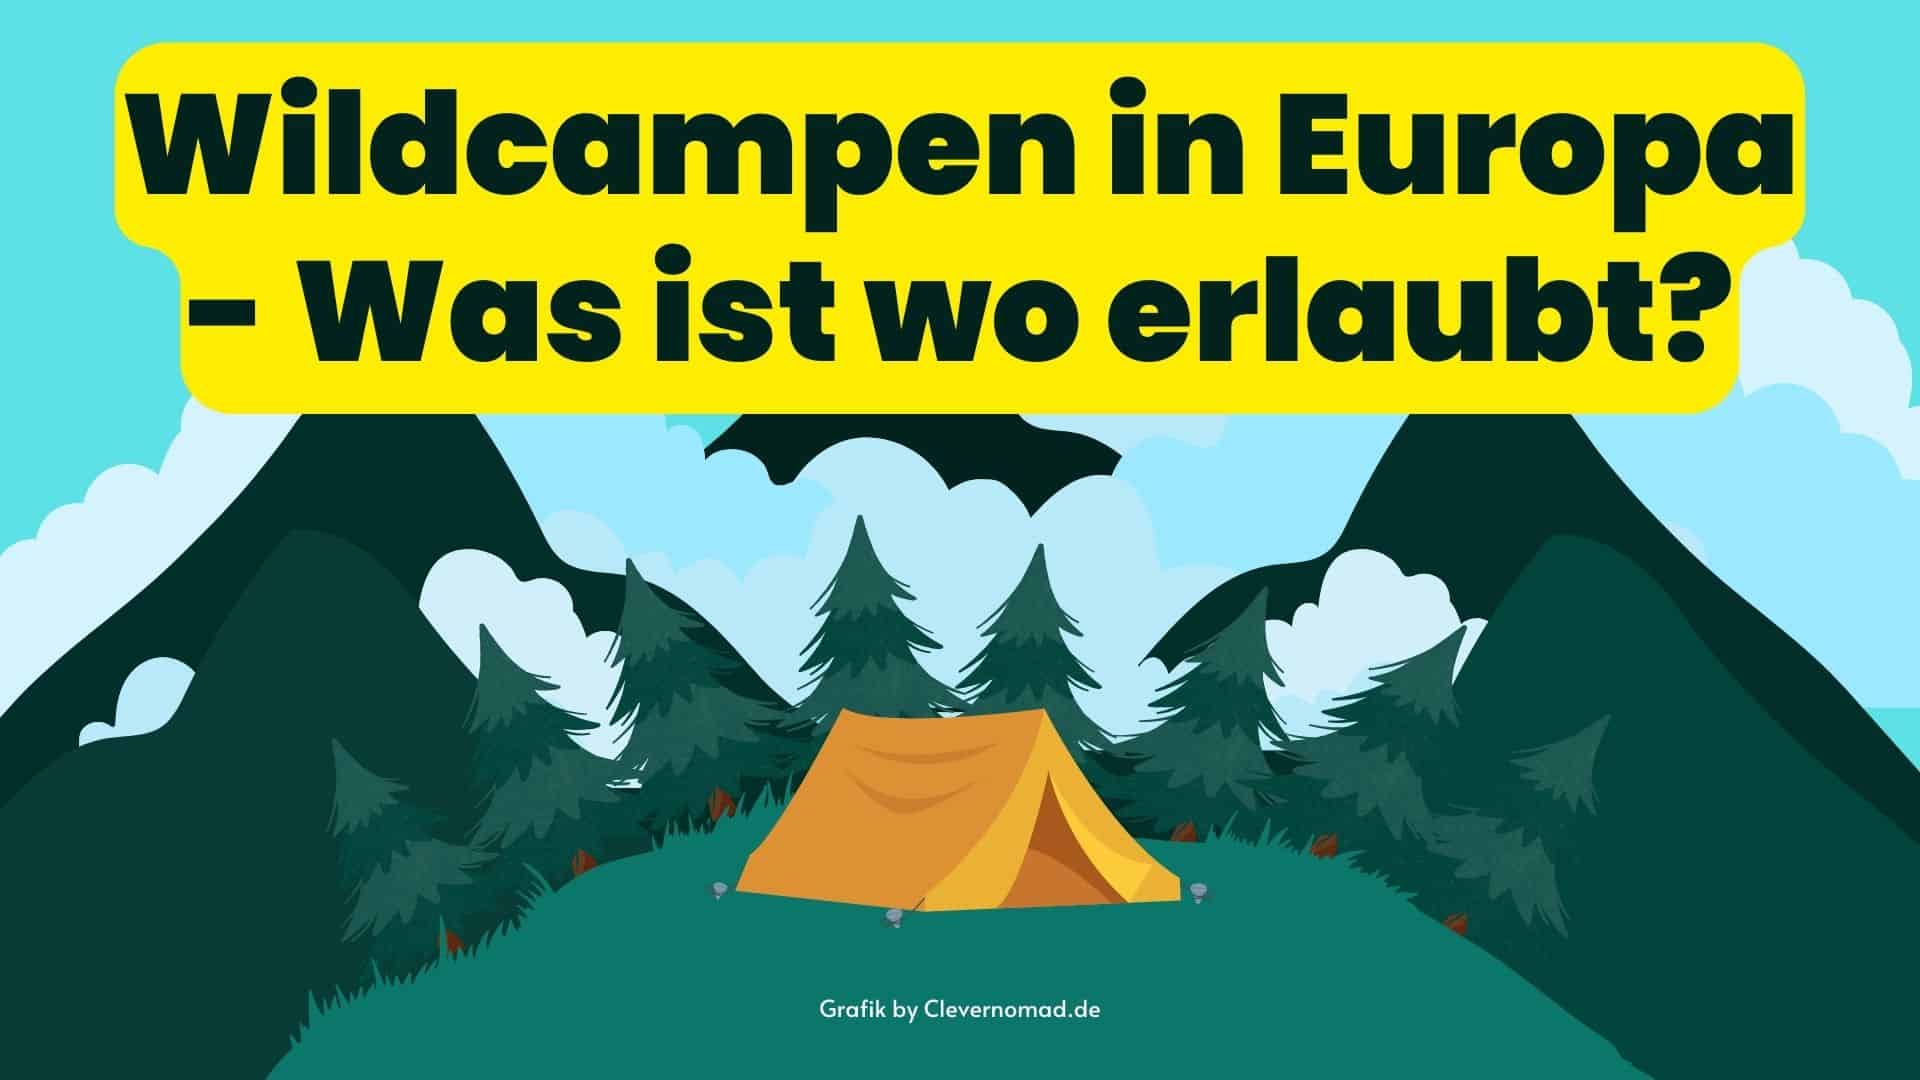 Wildcamping-jedermannsrecht-europa